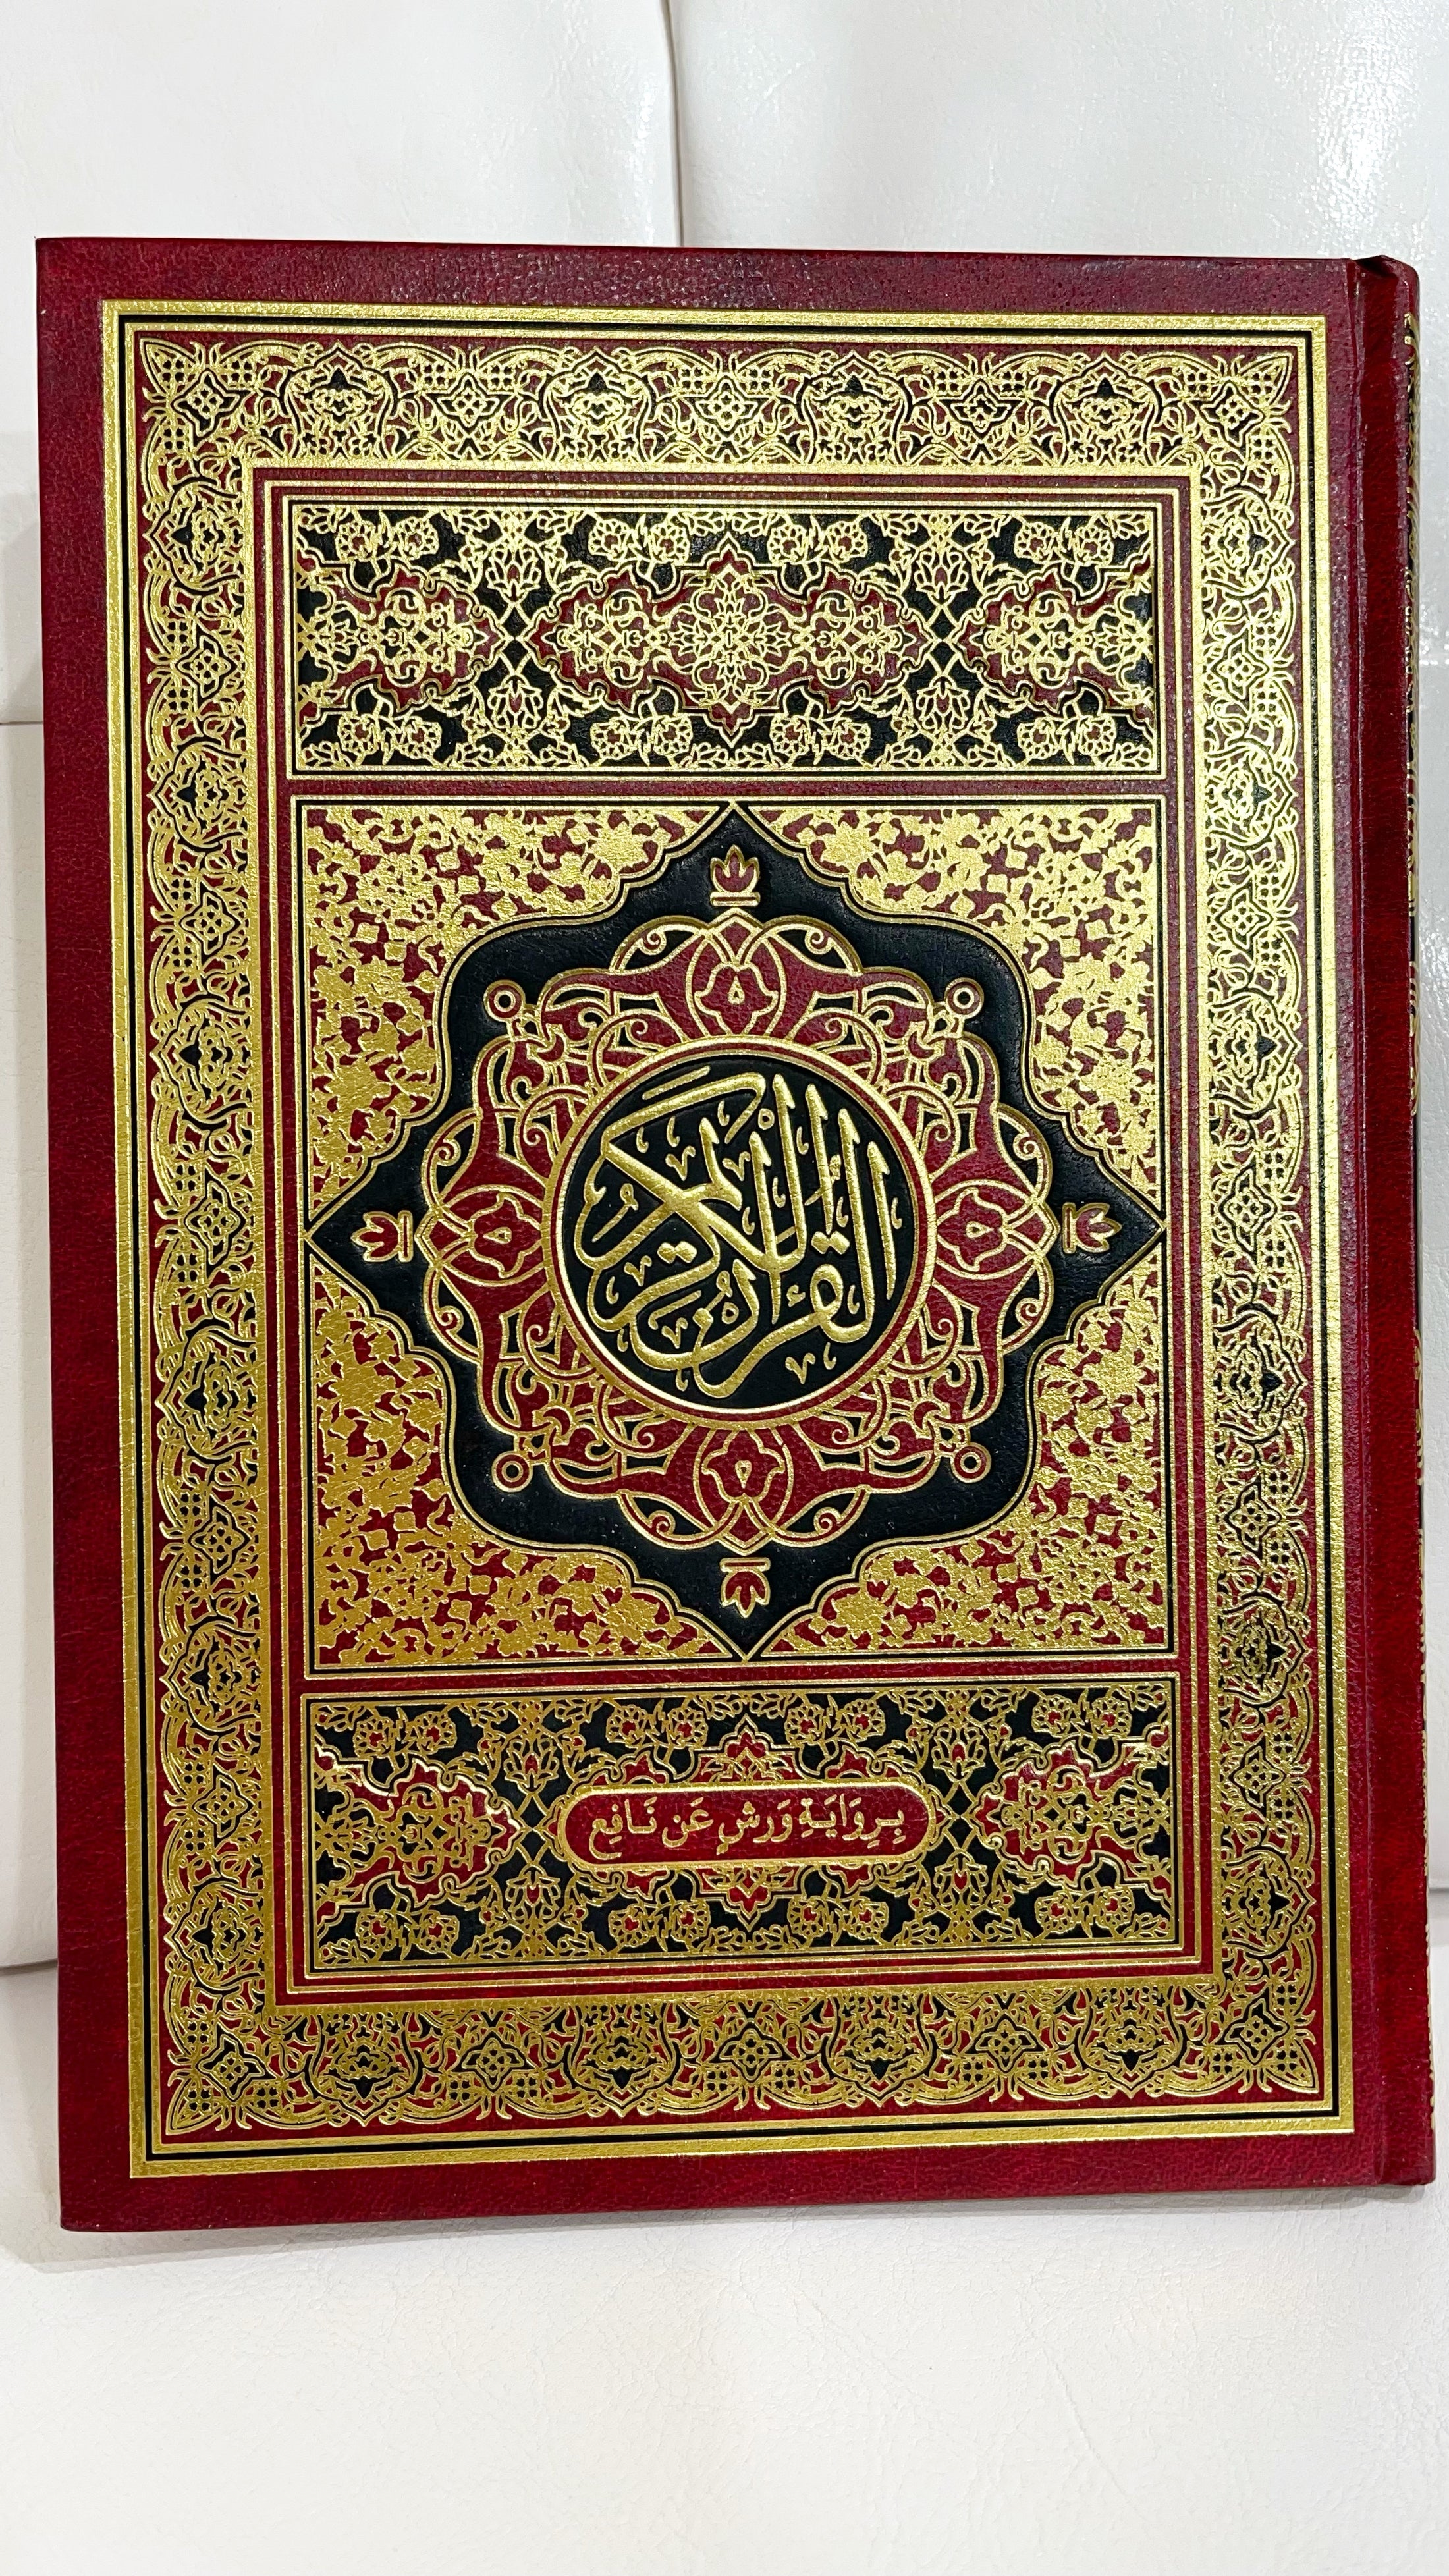 Corano warsh - Hijab Paradise - libro sacro - corano in arabo